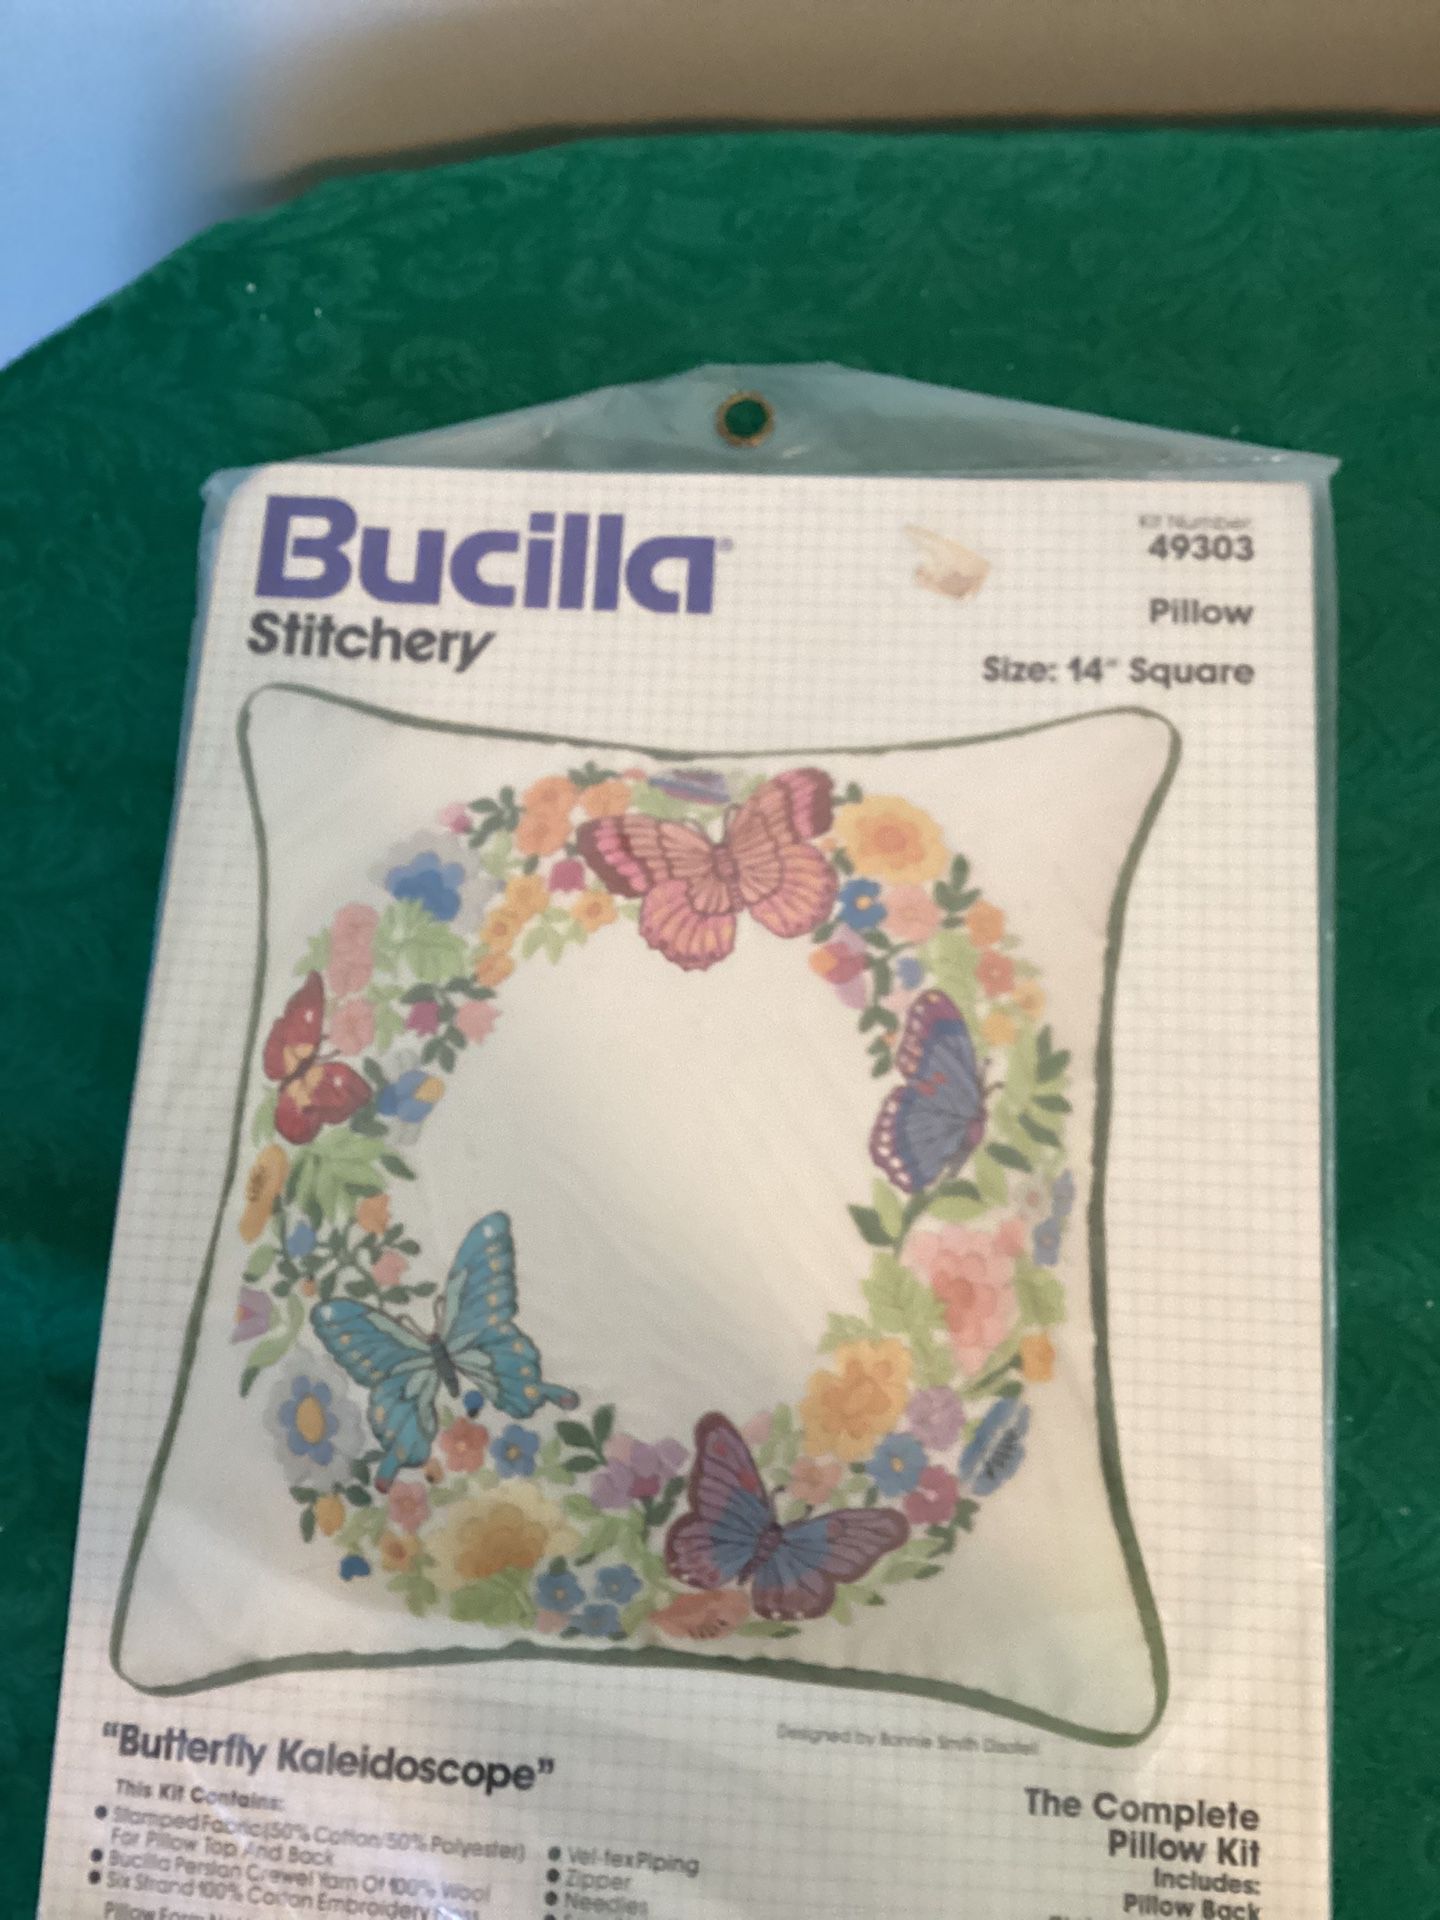 Bucilla Stitchery “Butterfly Kaleidoscope “ Pillow Kit #49303 14” Square Vintage NOS